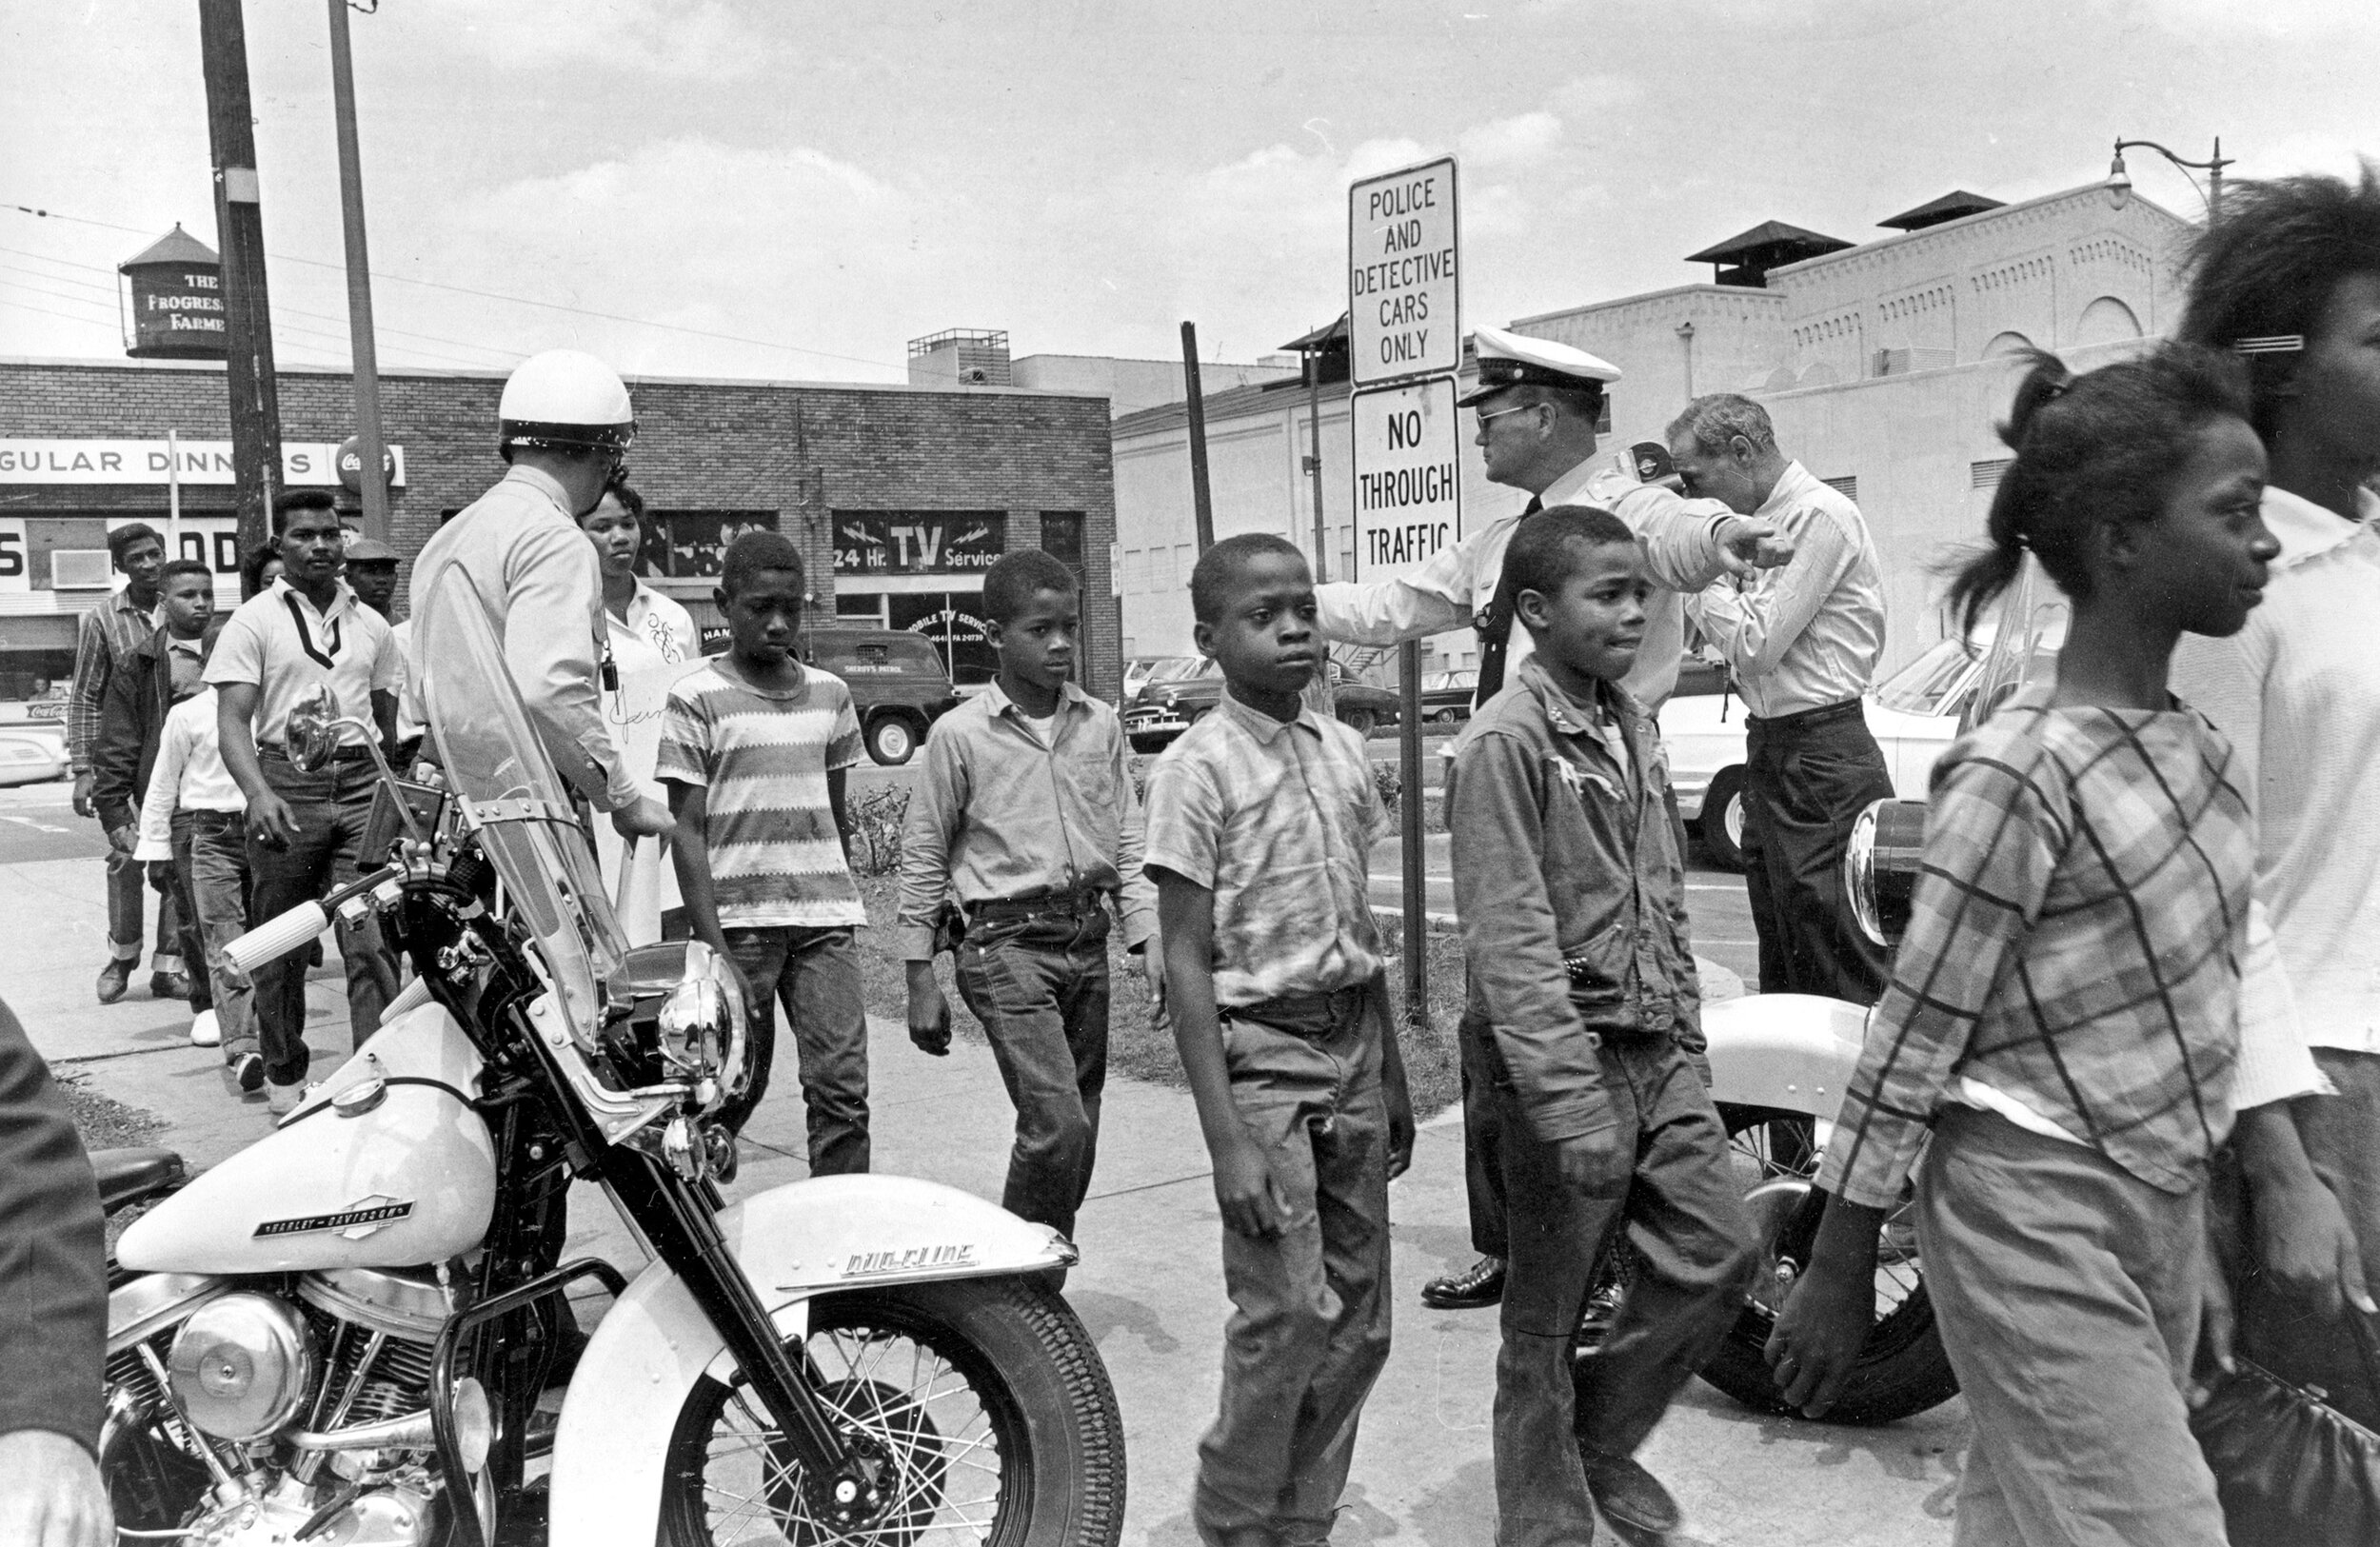  Young activists challenge segregation in Birmingham, Alabama. 